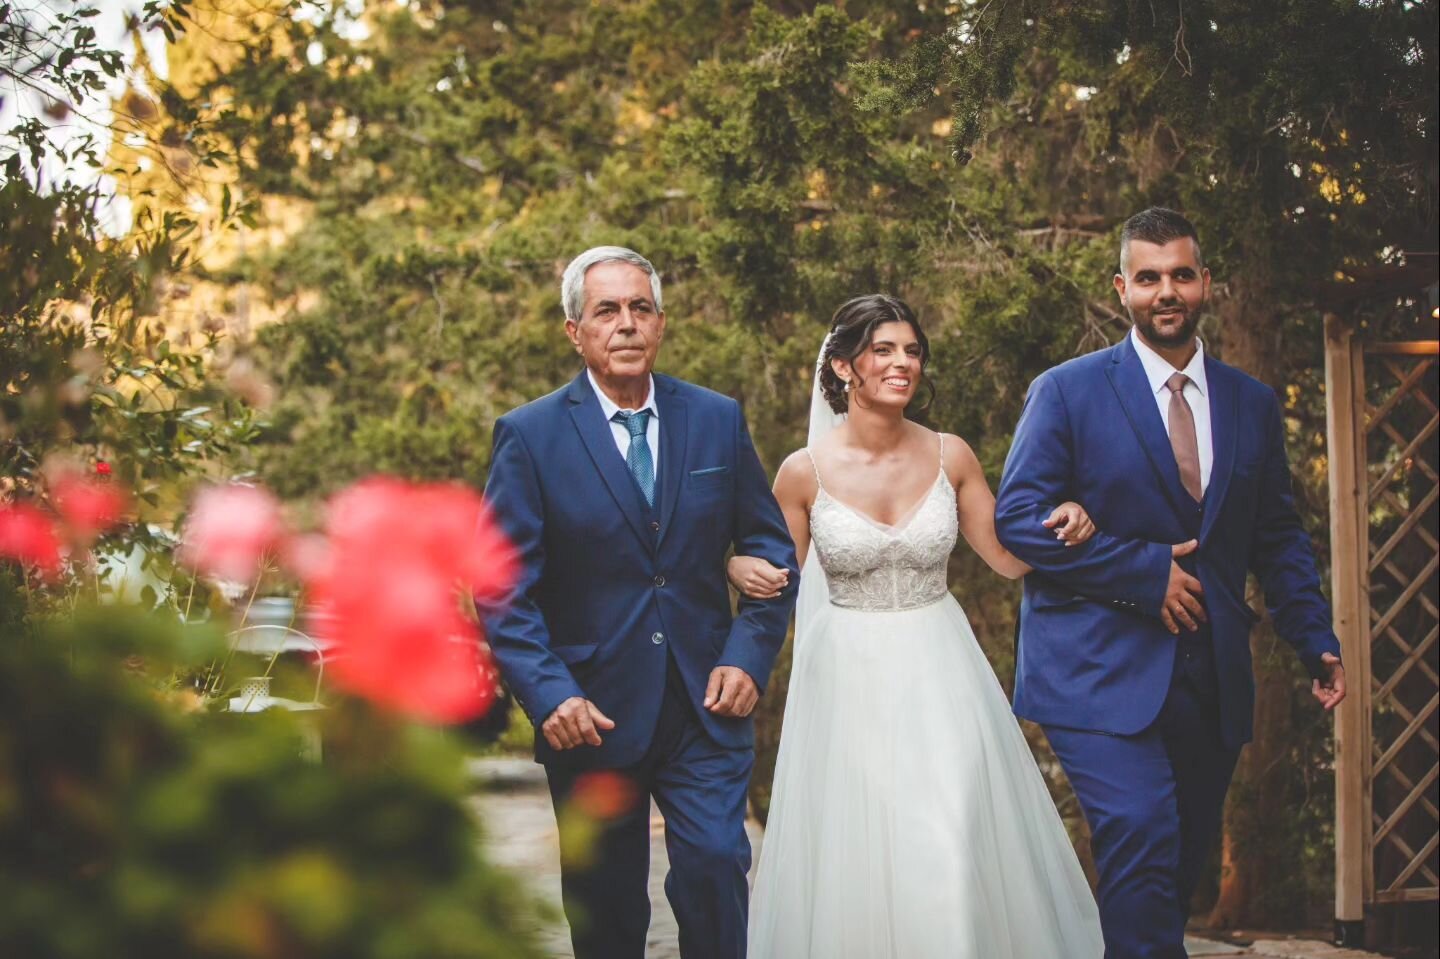 Together Photography
www.togetherphoto.gr 

#together #togetherphotography #wedding #weddingingreece #weddinginathens #weddingdress #bridehairstyle #greece #athens #greekphotographer #photographerinathens #athensphotographer